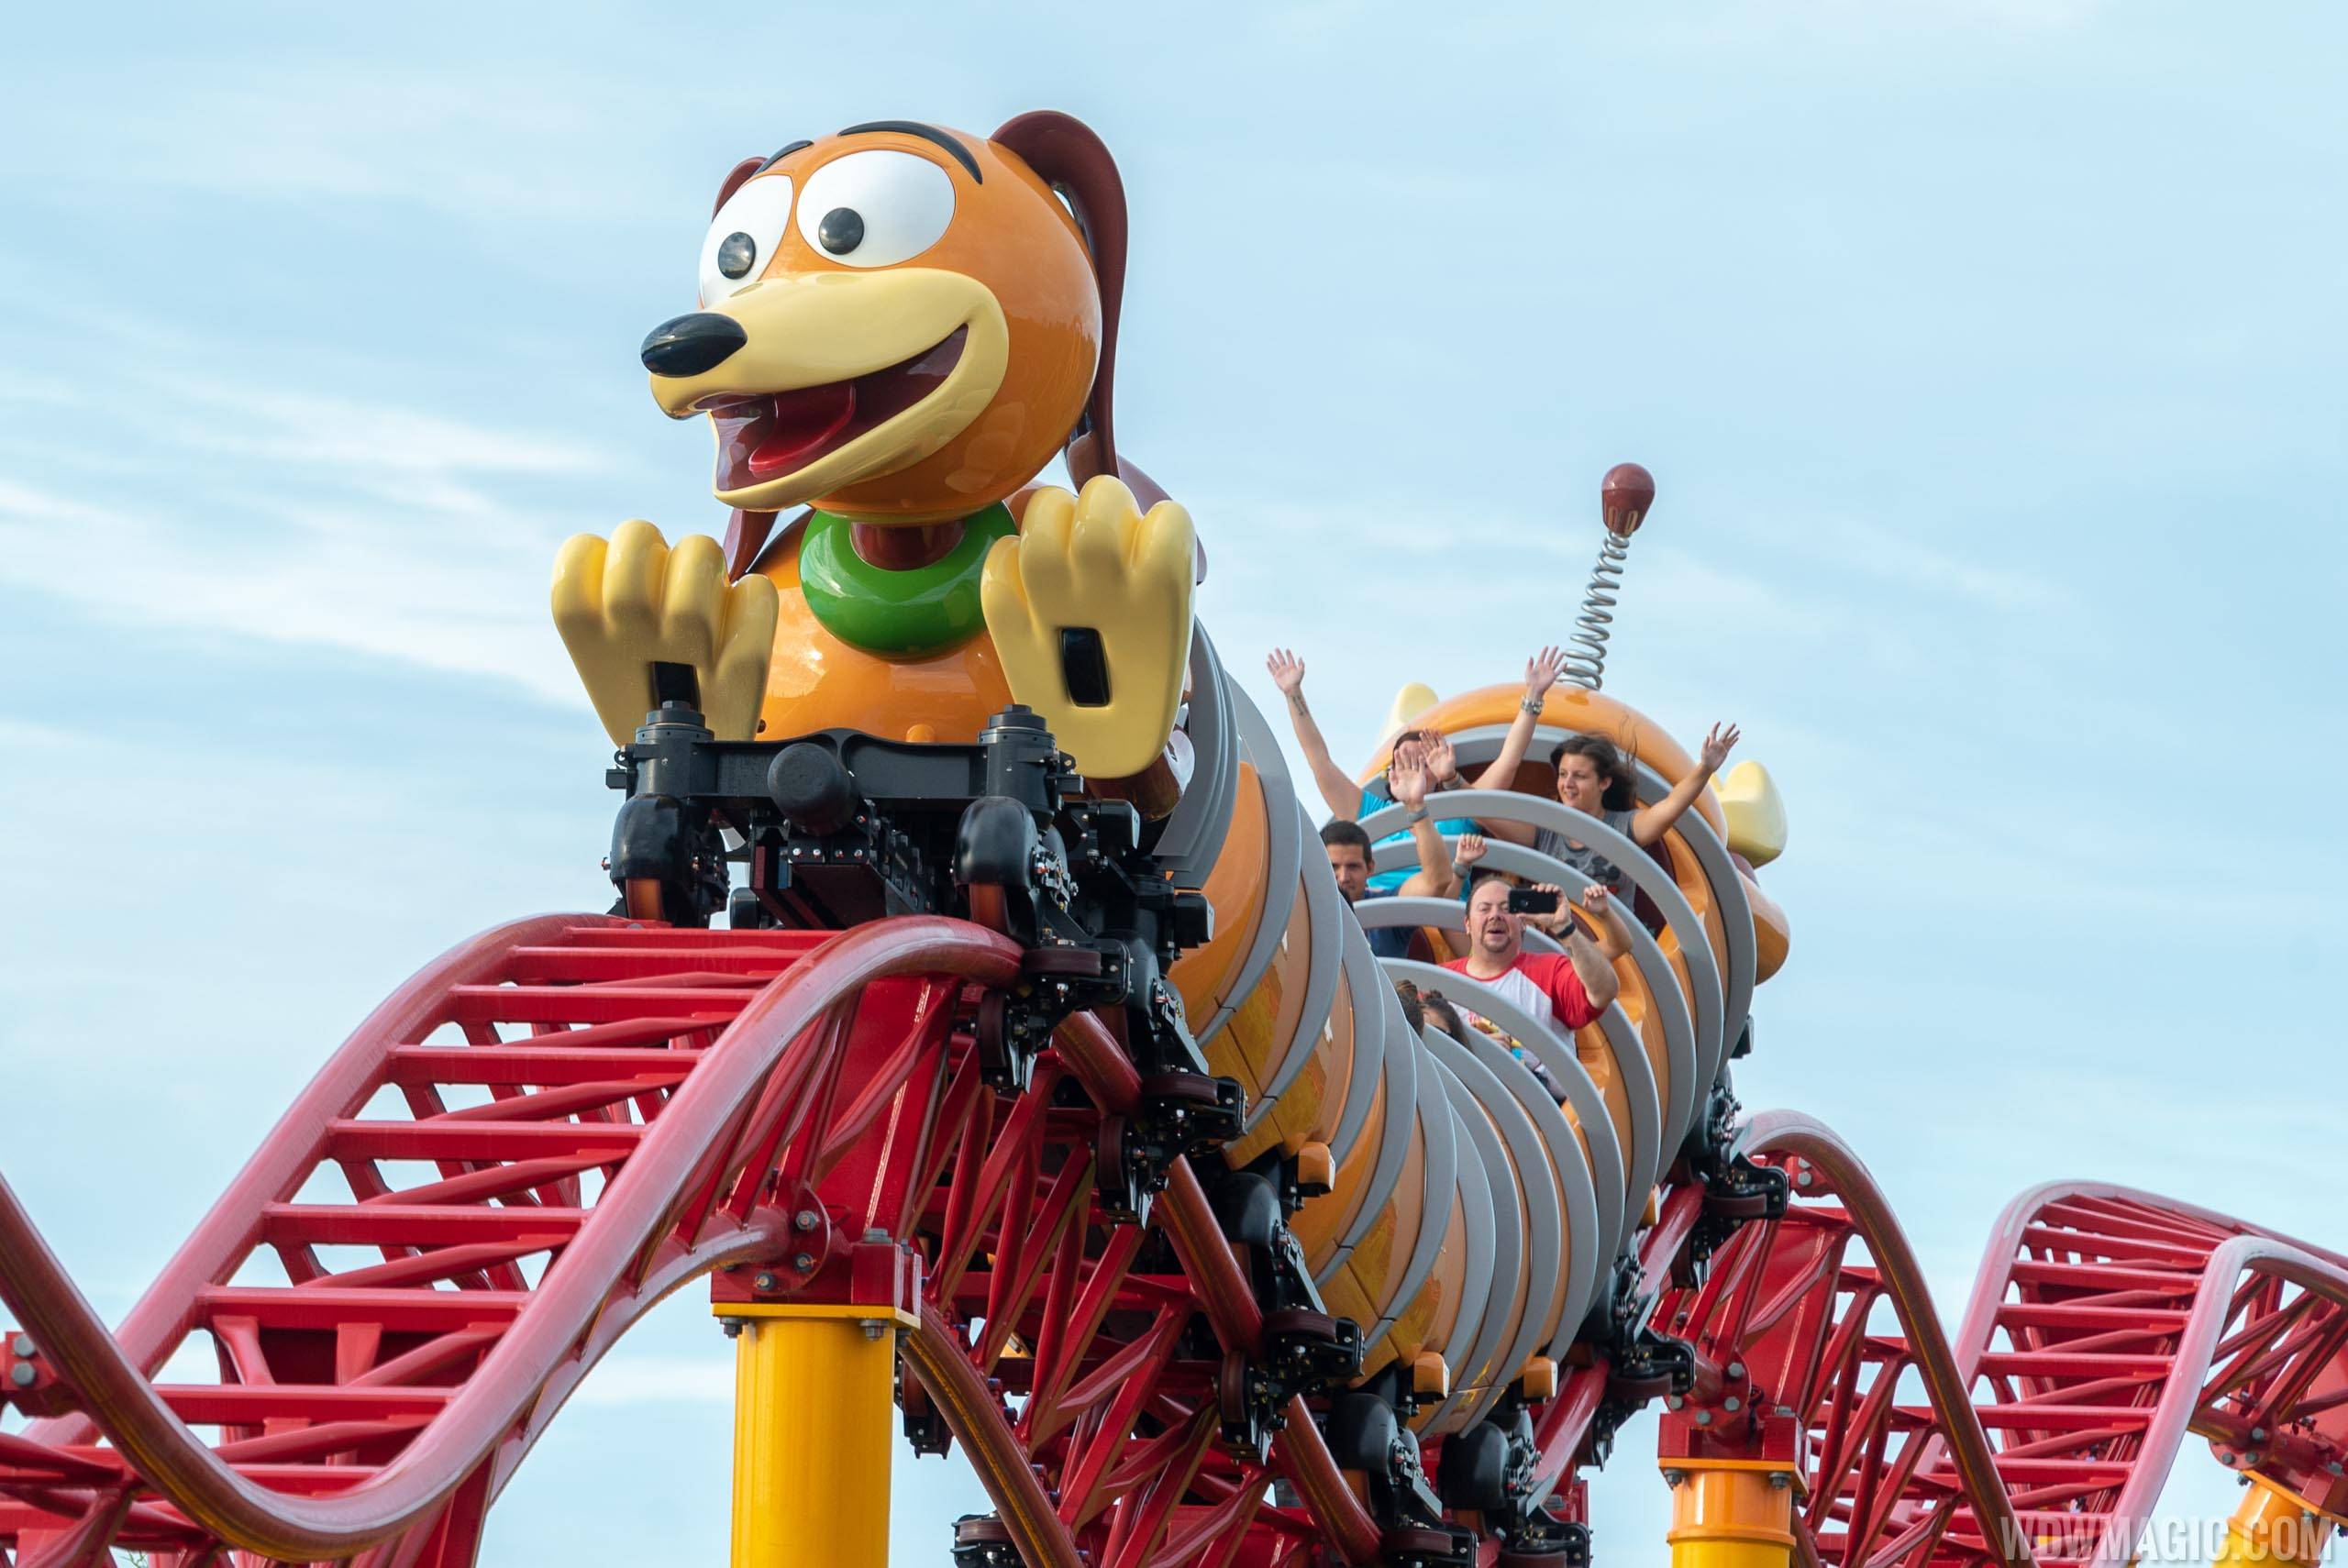 Slinky Dog Dash - Disney's Roller Coaster Ride - Disney's Hollywood Studios  